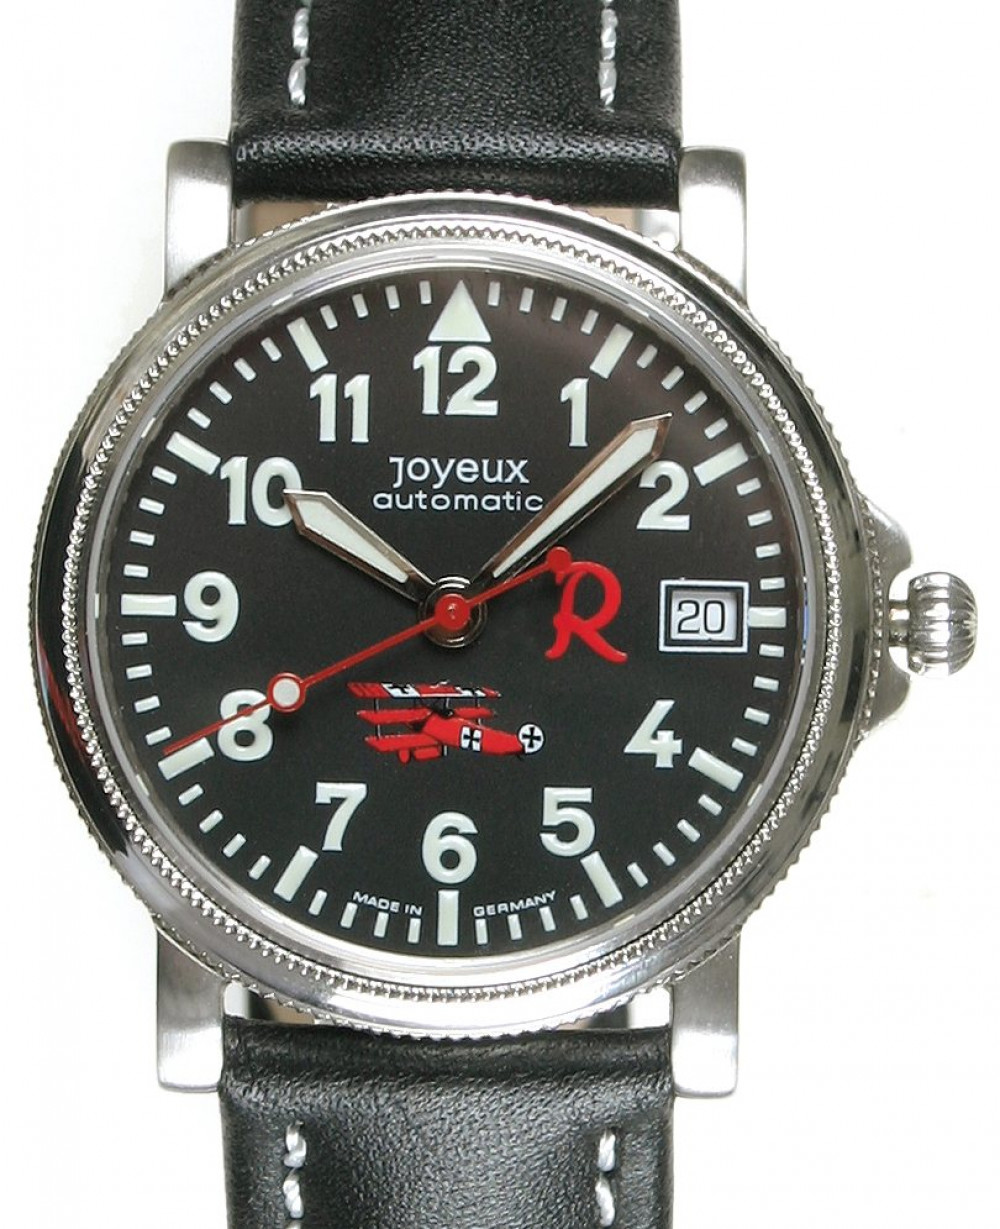 Zegarek firmy Joyeux, model Richthofen Dreidecker rot